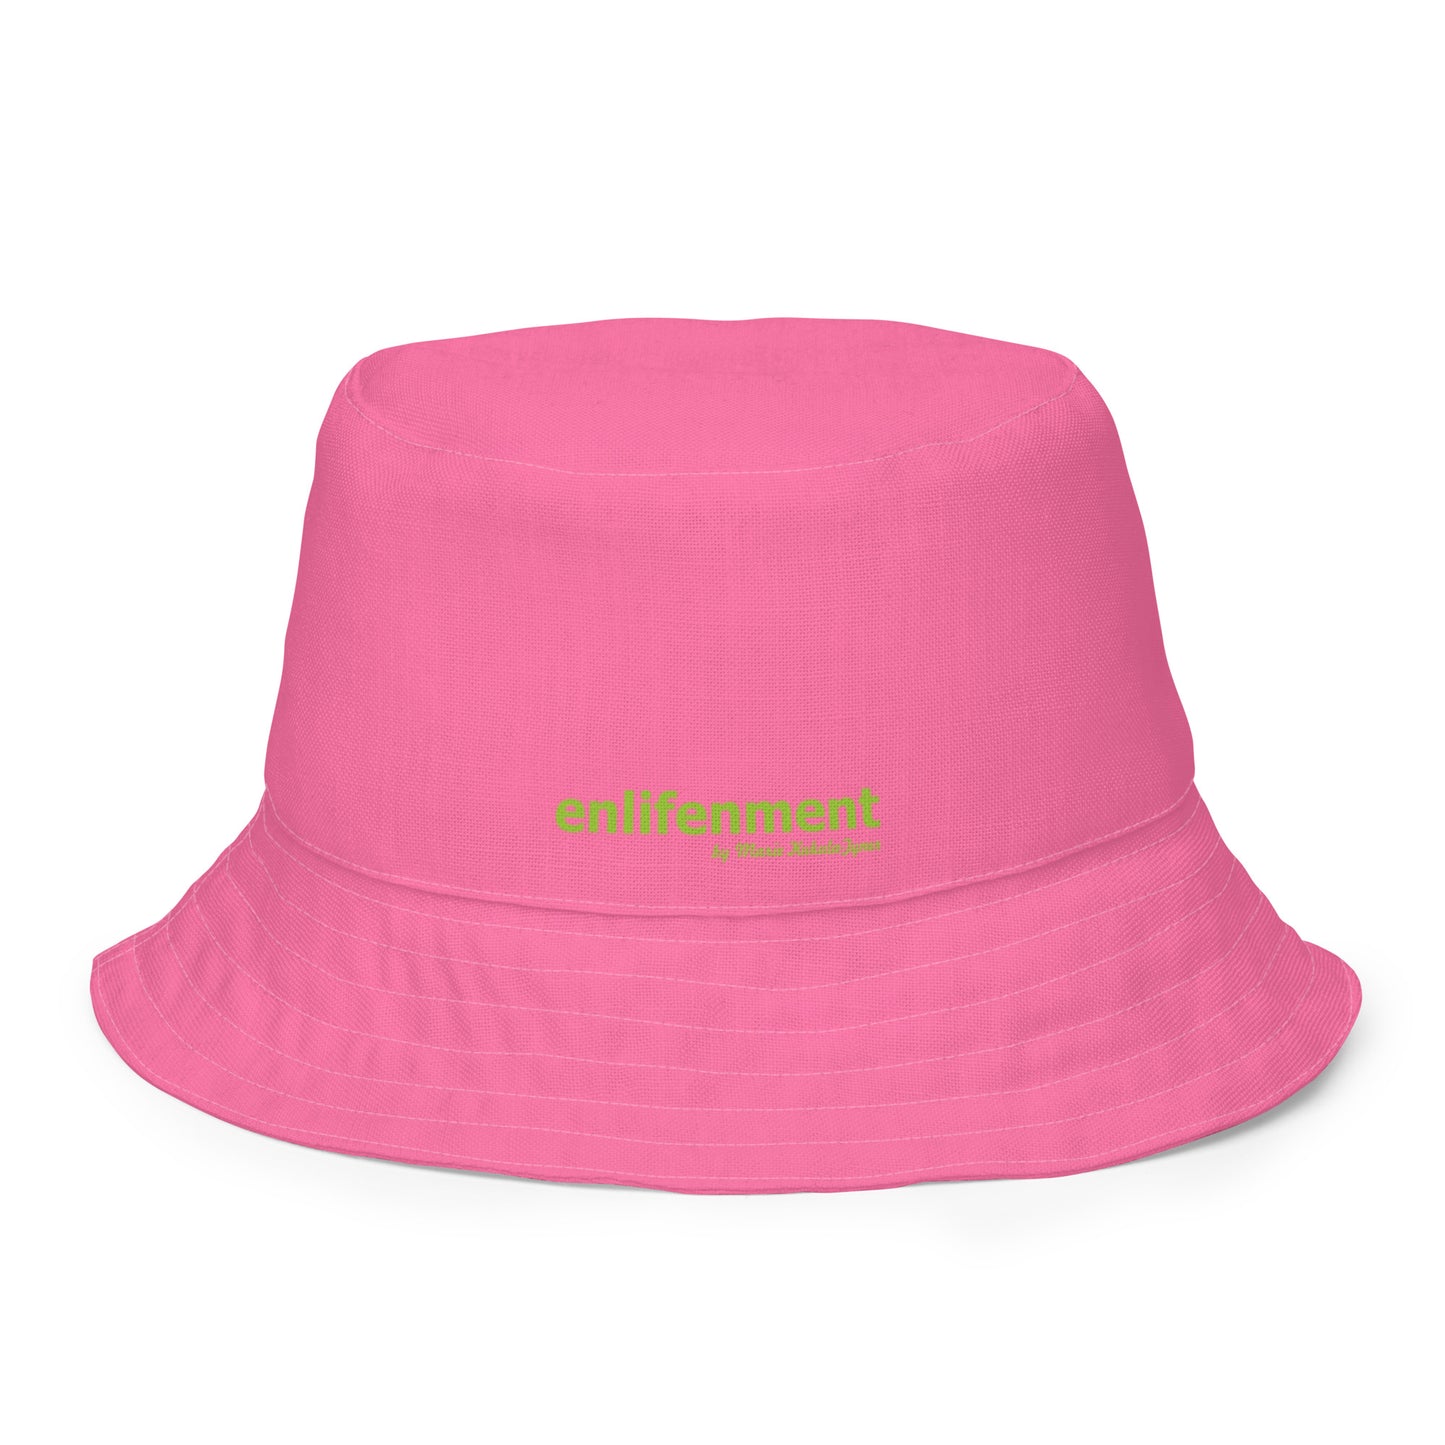 The FLOWER LOVE Collection - "Wildflower Wonder" Design Premium Reversible Bucket Hat - Pink Inside - Wildflower Hat, Gifts for Her